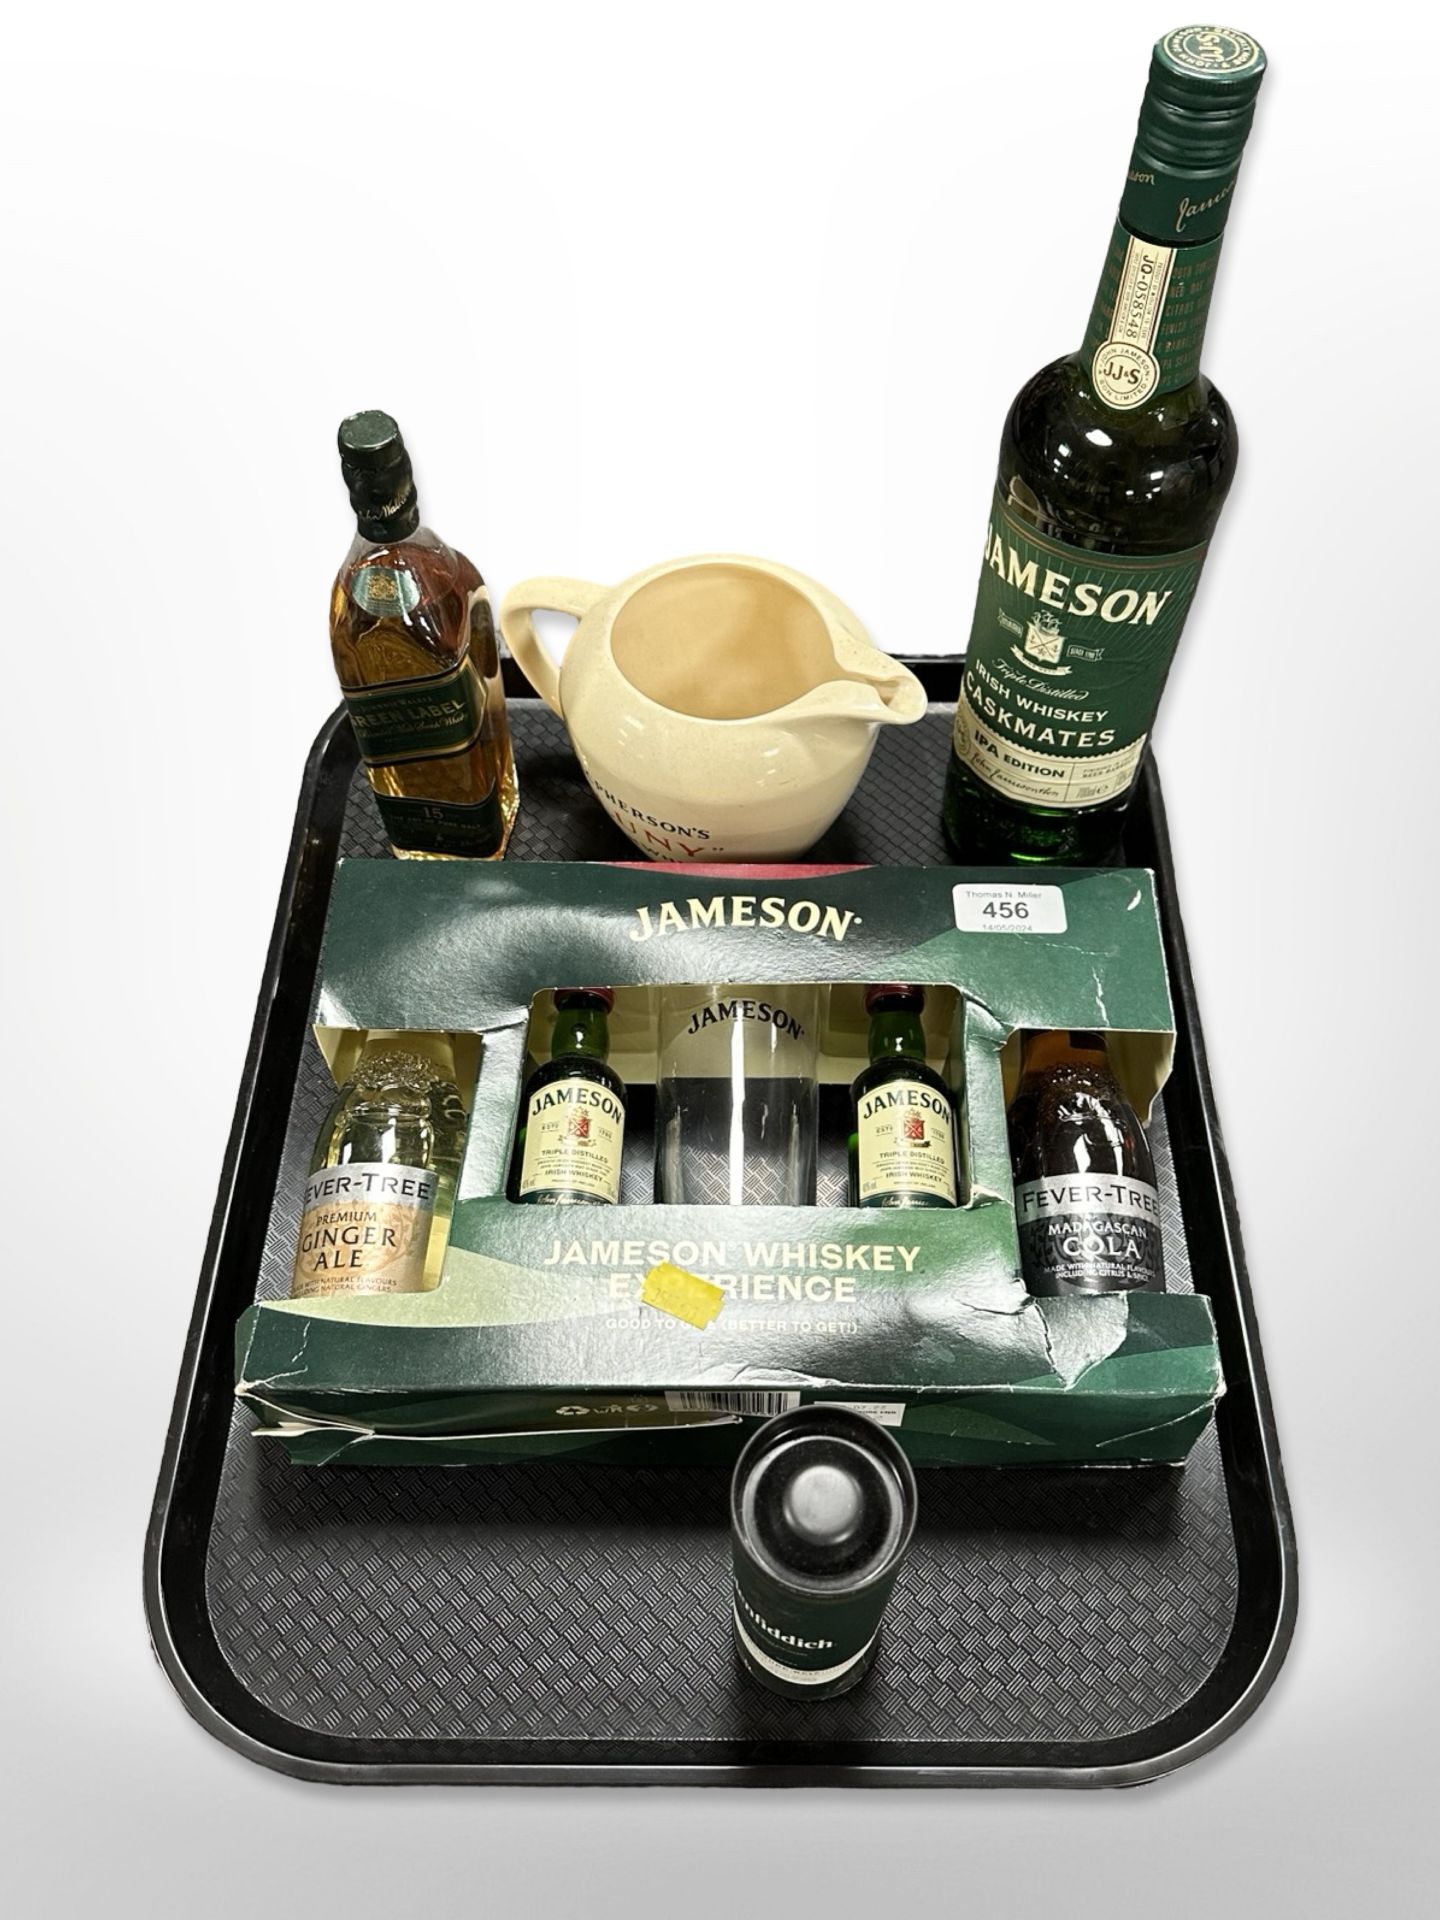 A Jameson whiskey gift set, further bottle of Jameson Irish Whiskey,